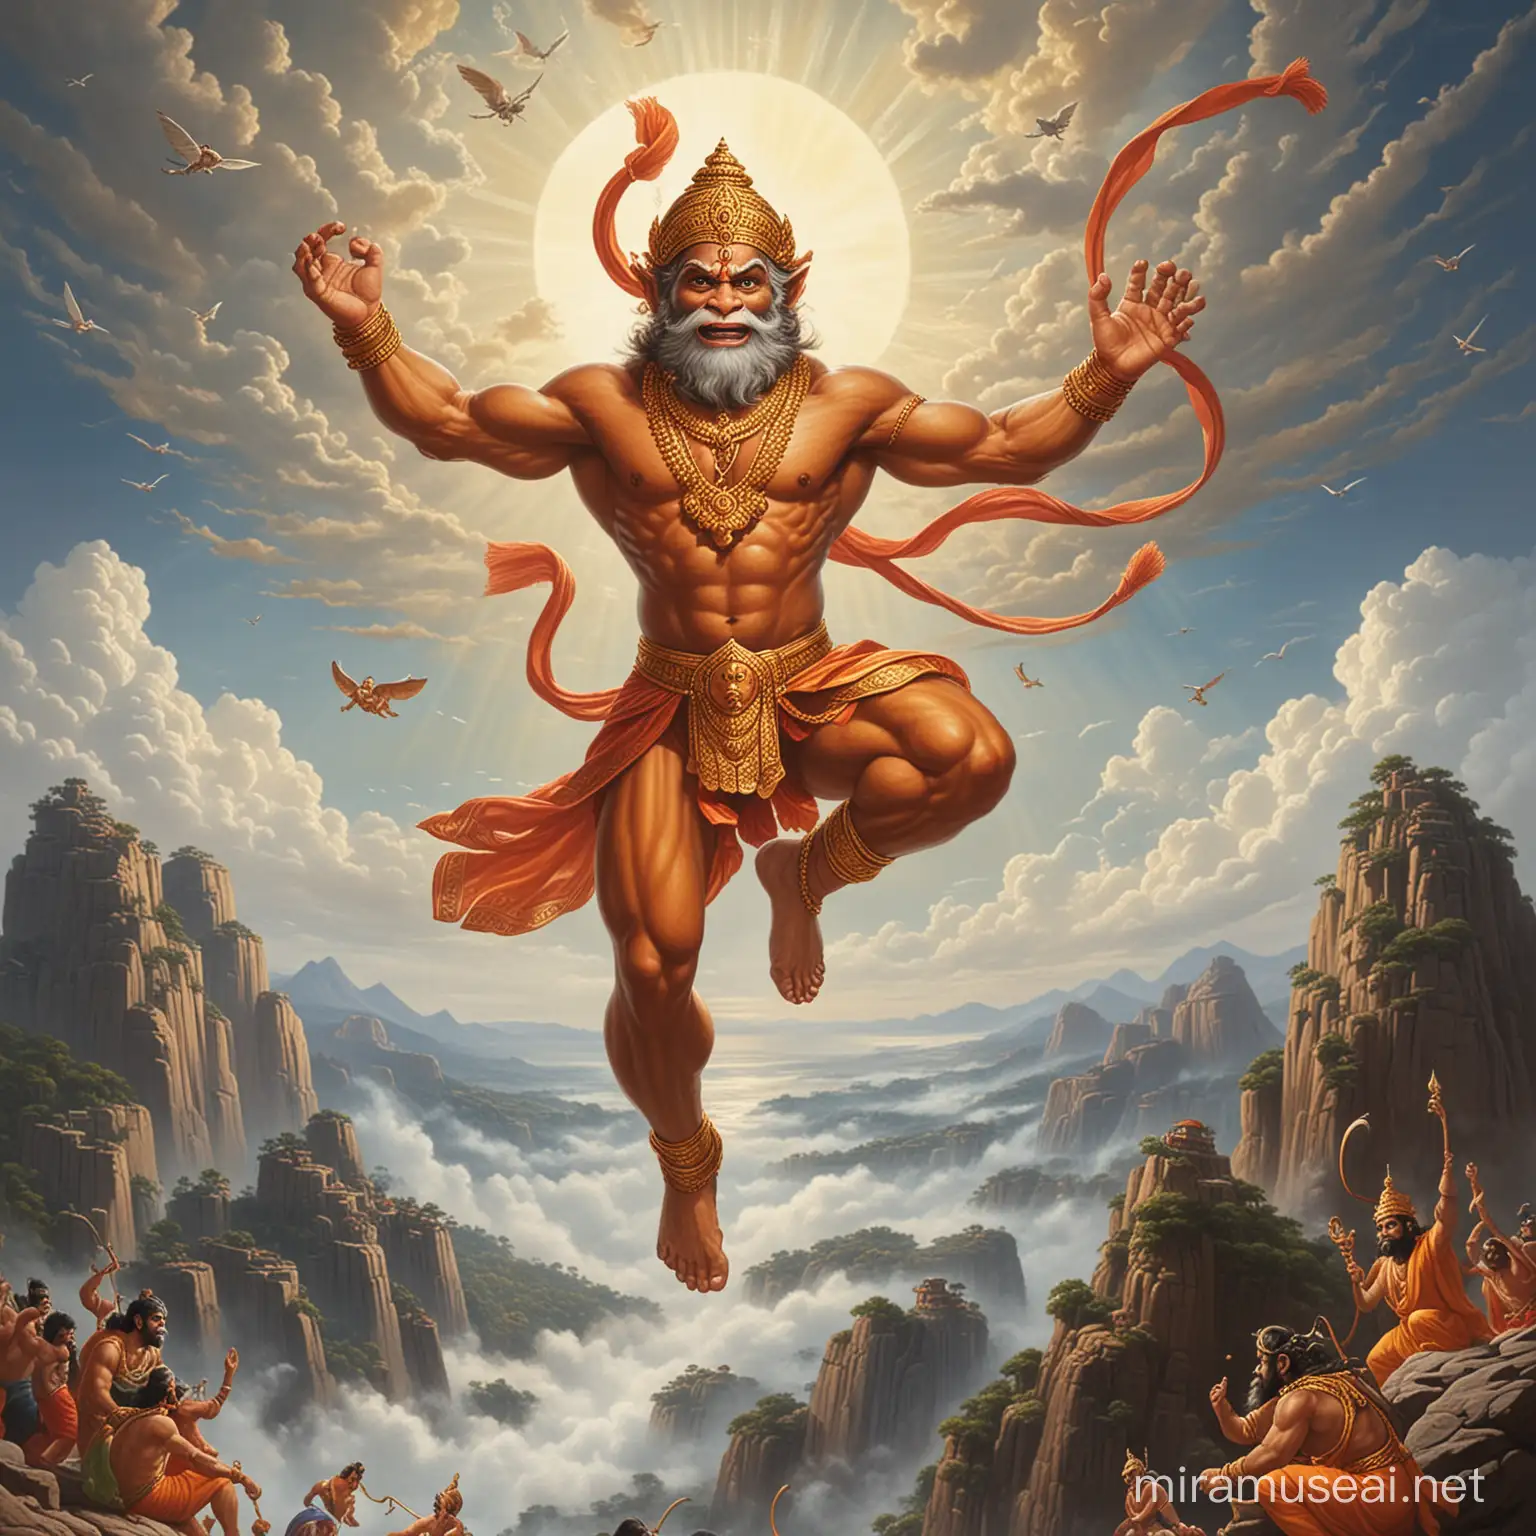 hanuman is flying with his gada